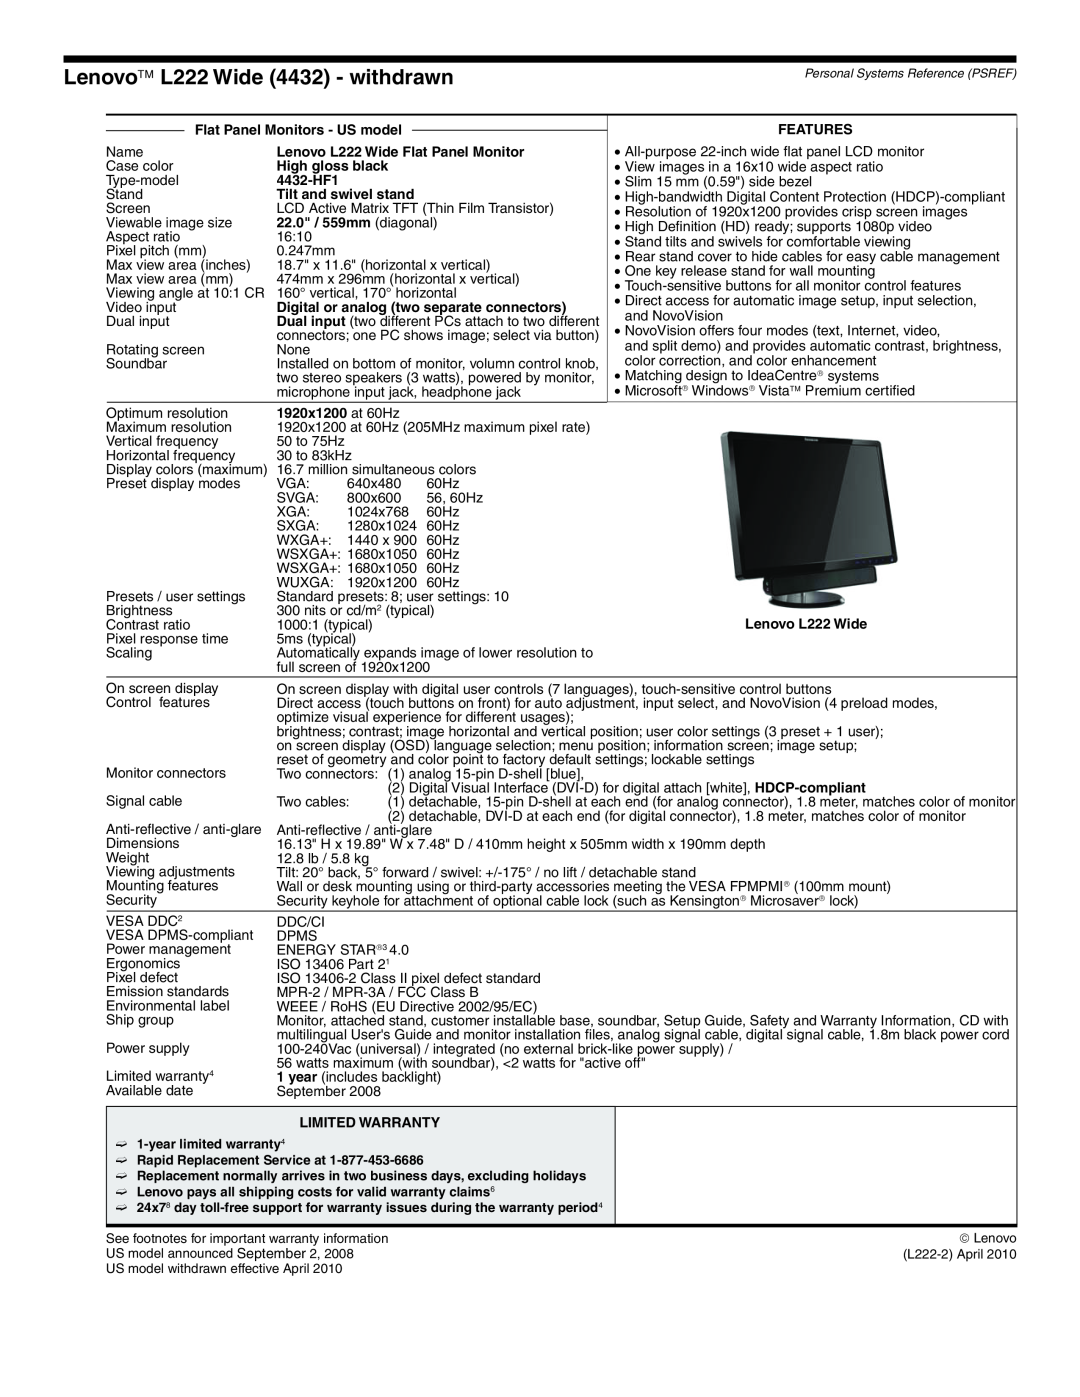 Lenovo L2363D manual Lenovo L222 Wide 4432 - withdrawn 